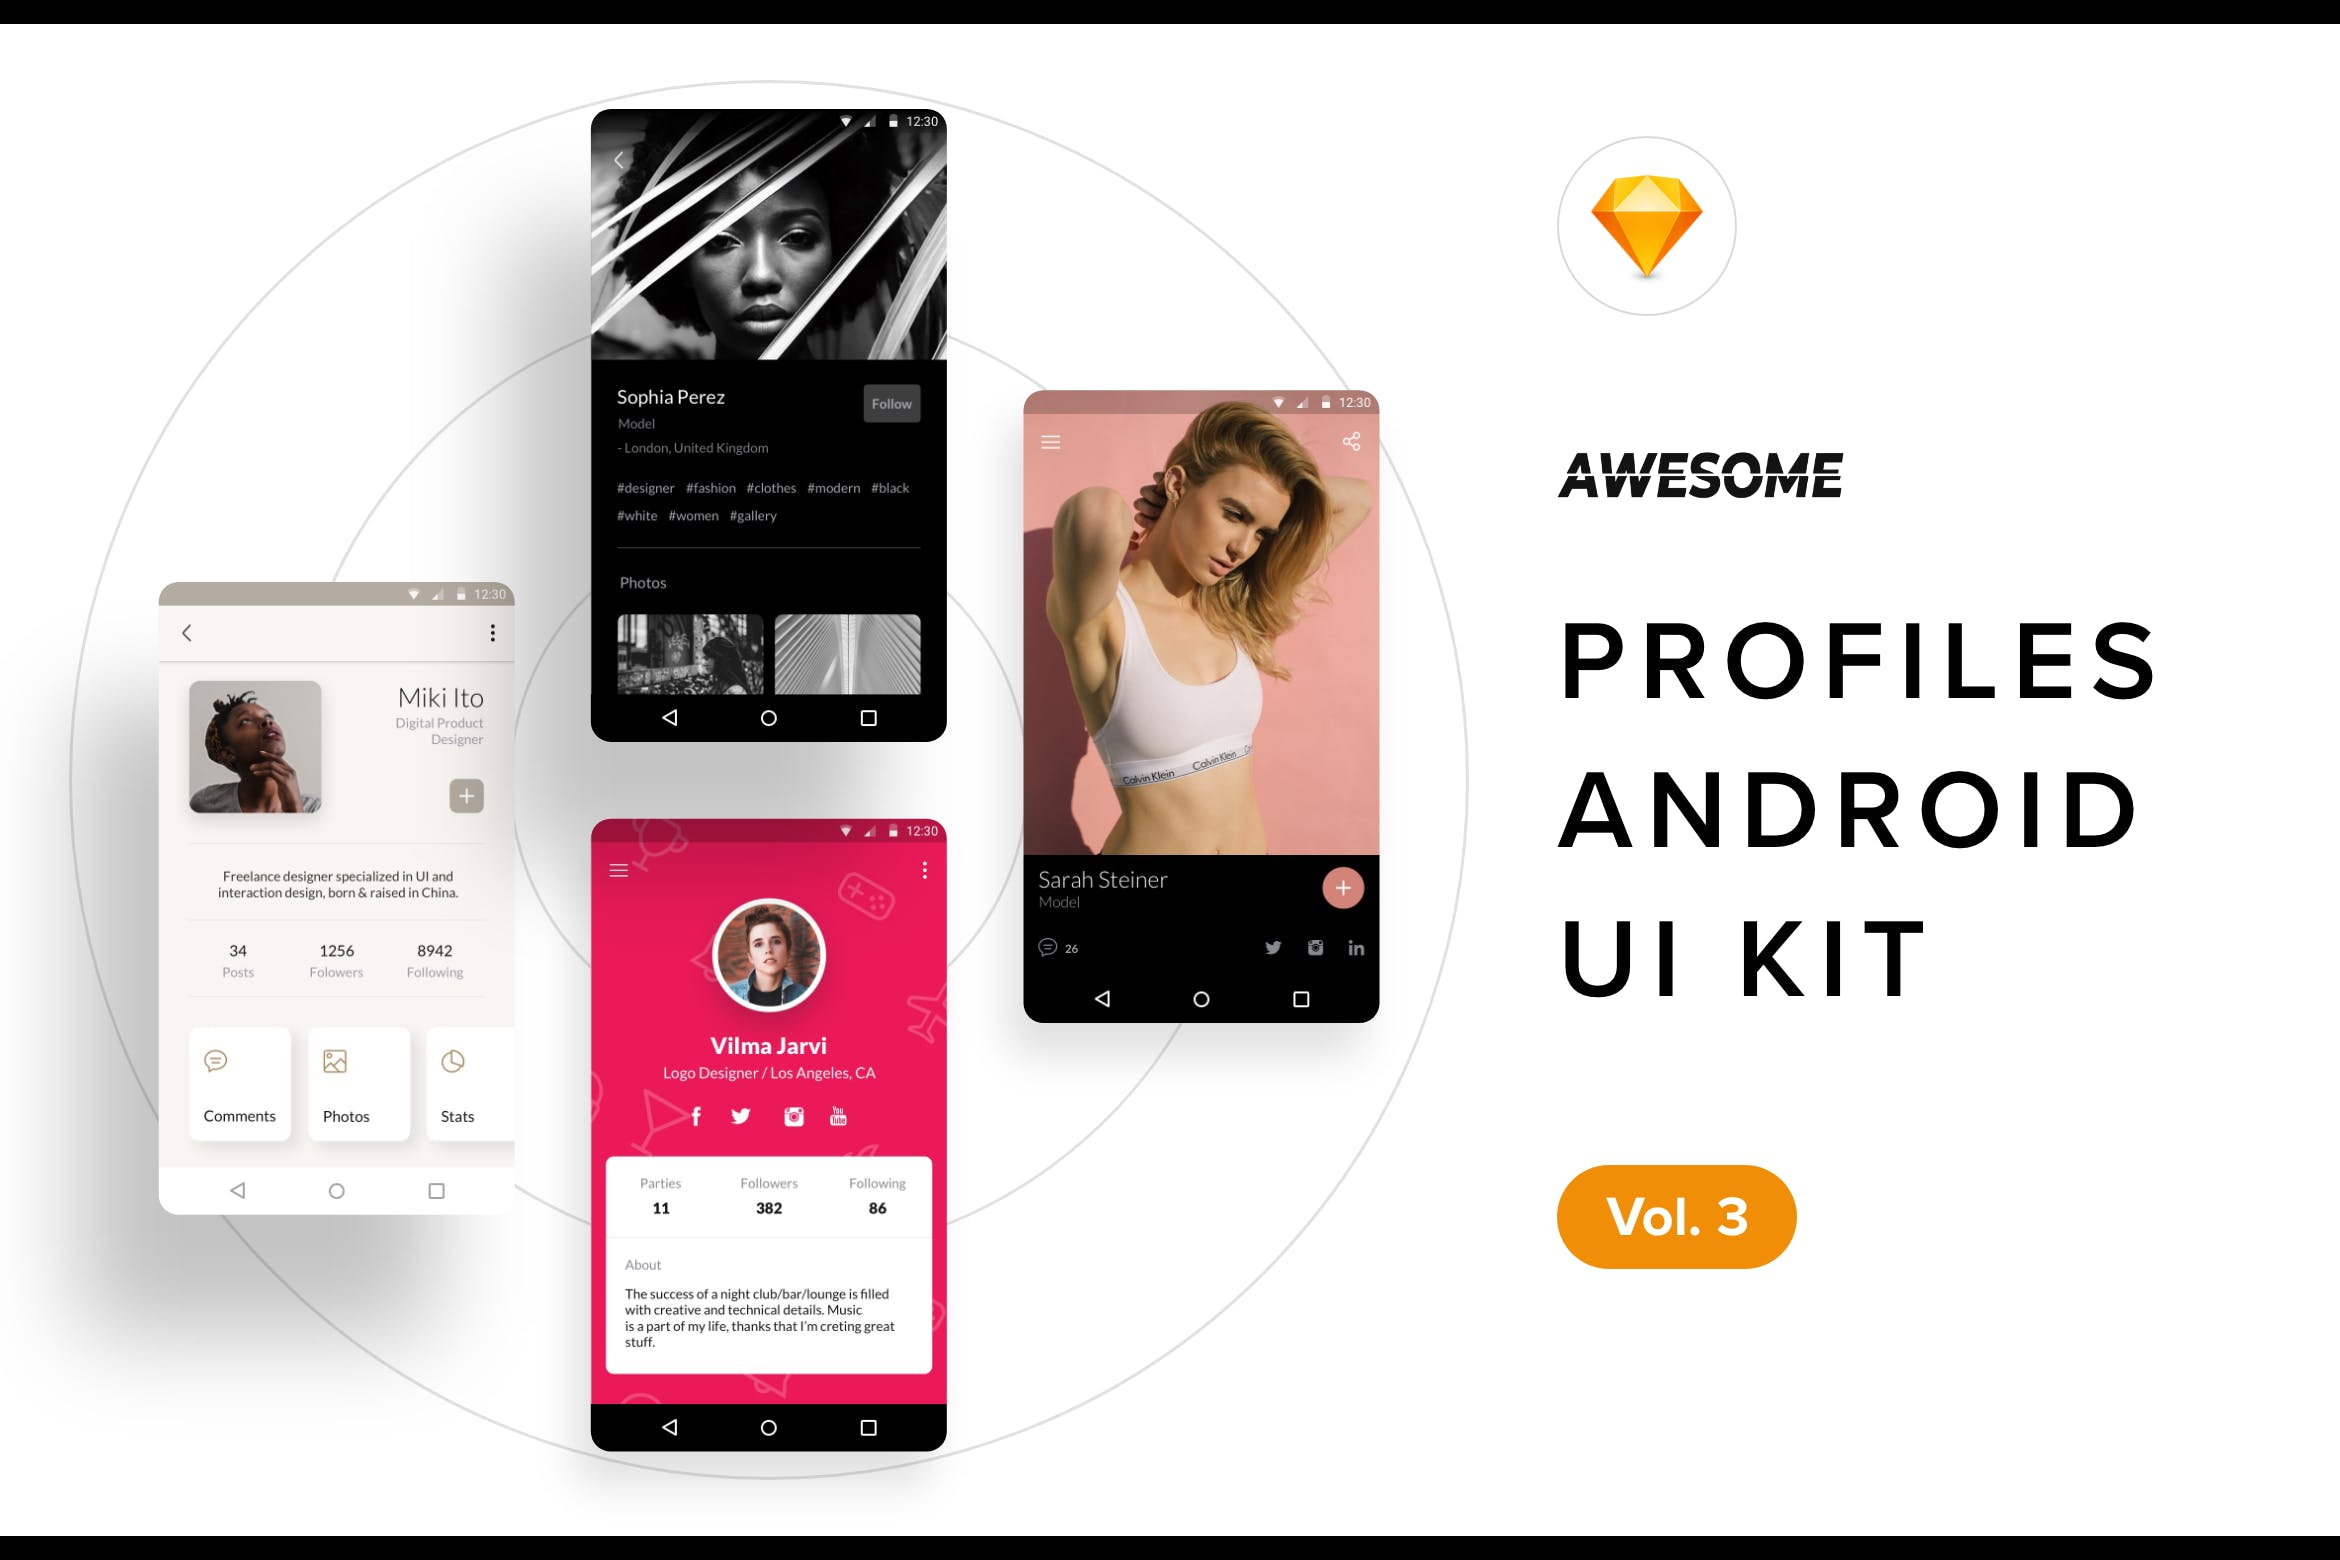 社交APP应用用户中心界面设计模板v3[SKETCH] Android UI Kit – Profiles Vol. 3 (Sketch)插图